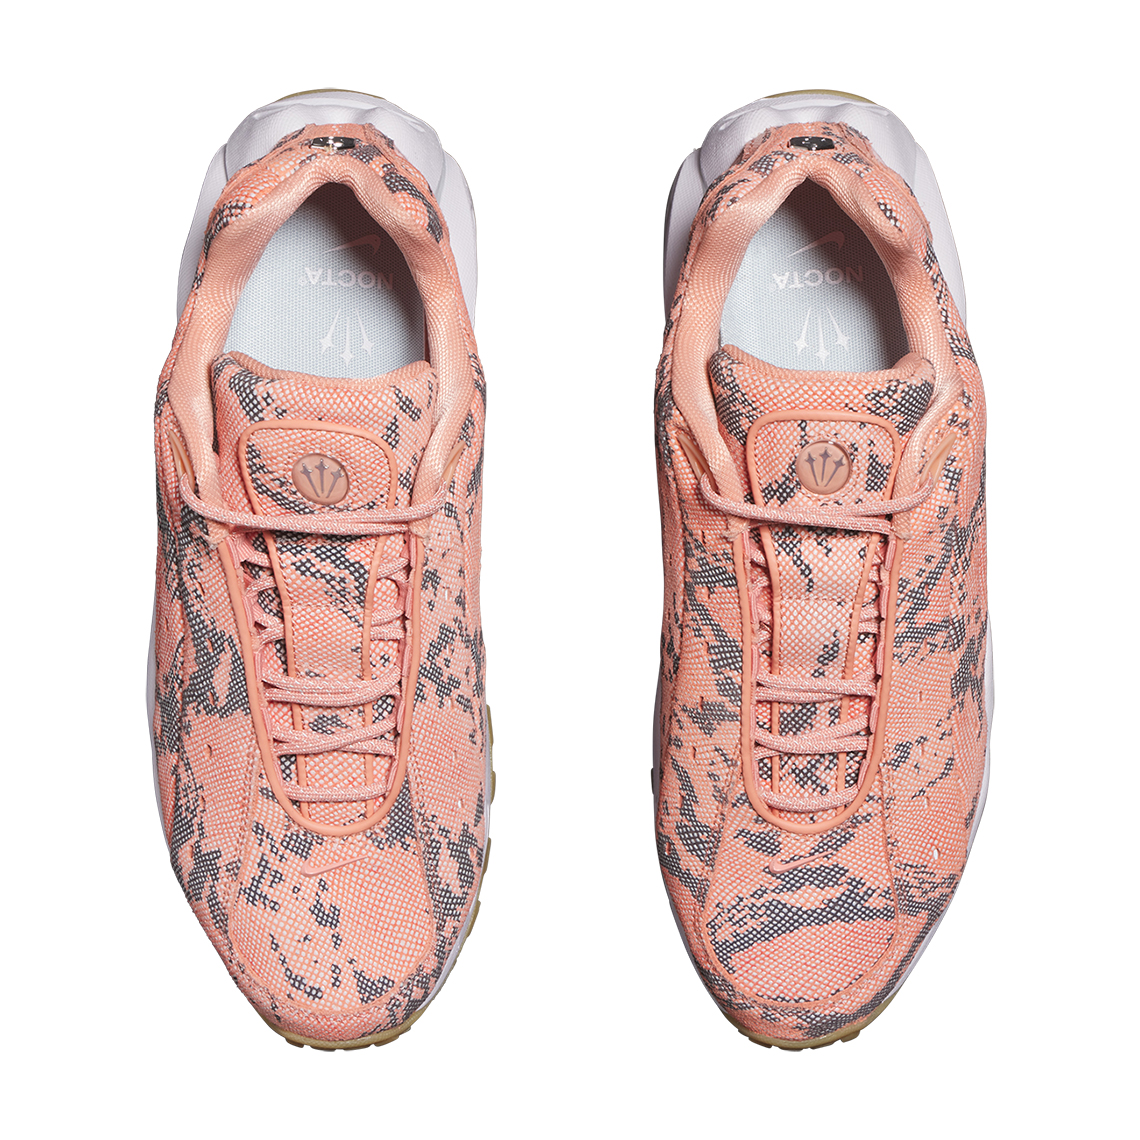 Nike super Nocta nike super flyknit chukkas for women black boots sale Pink Oxford 2